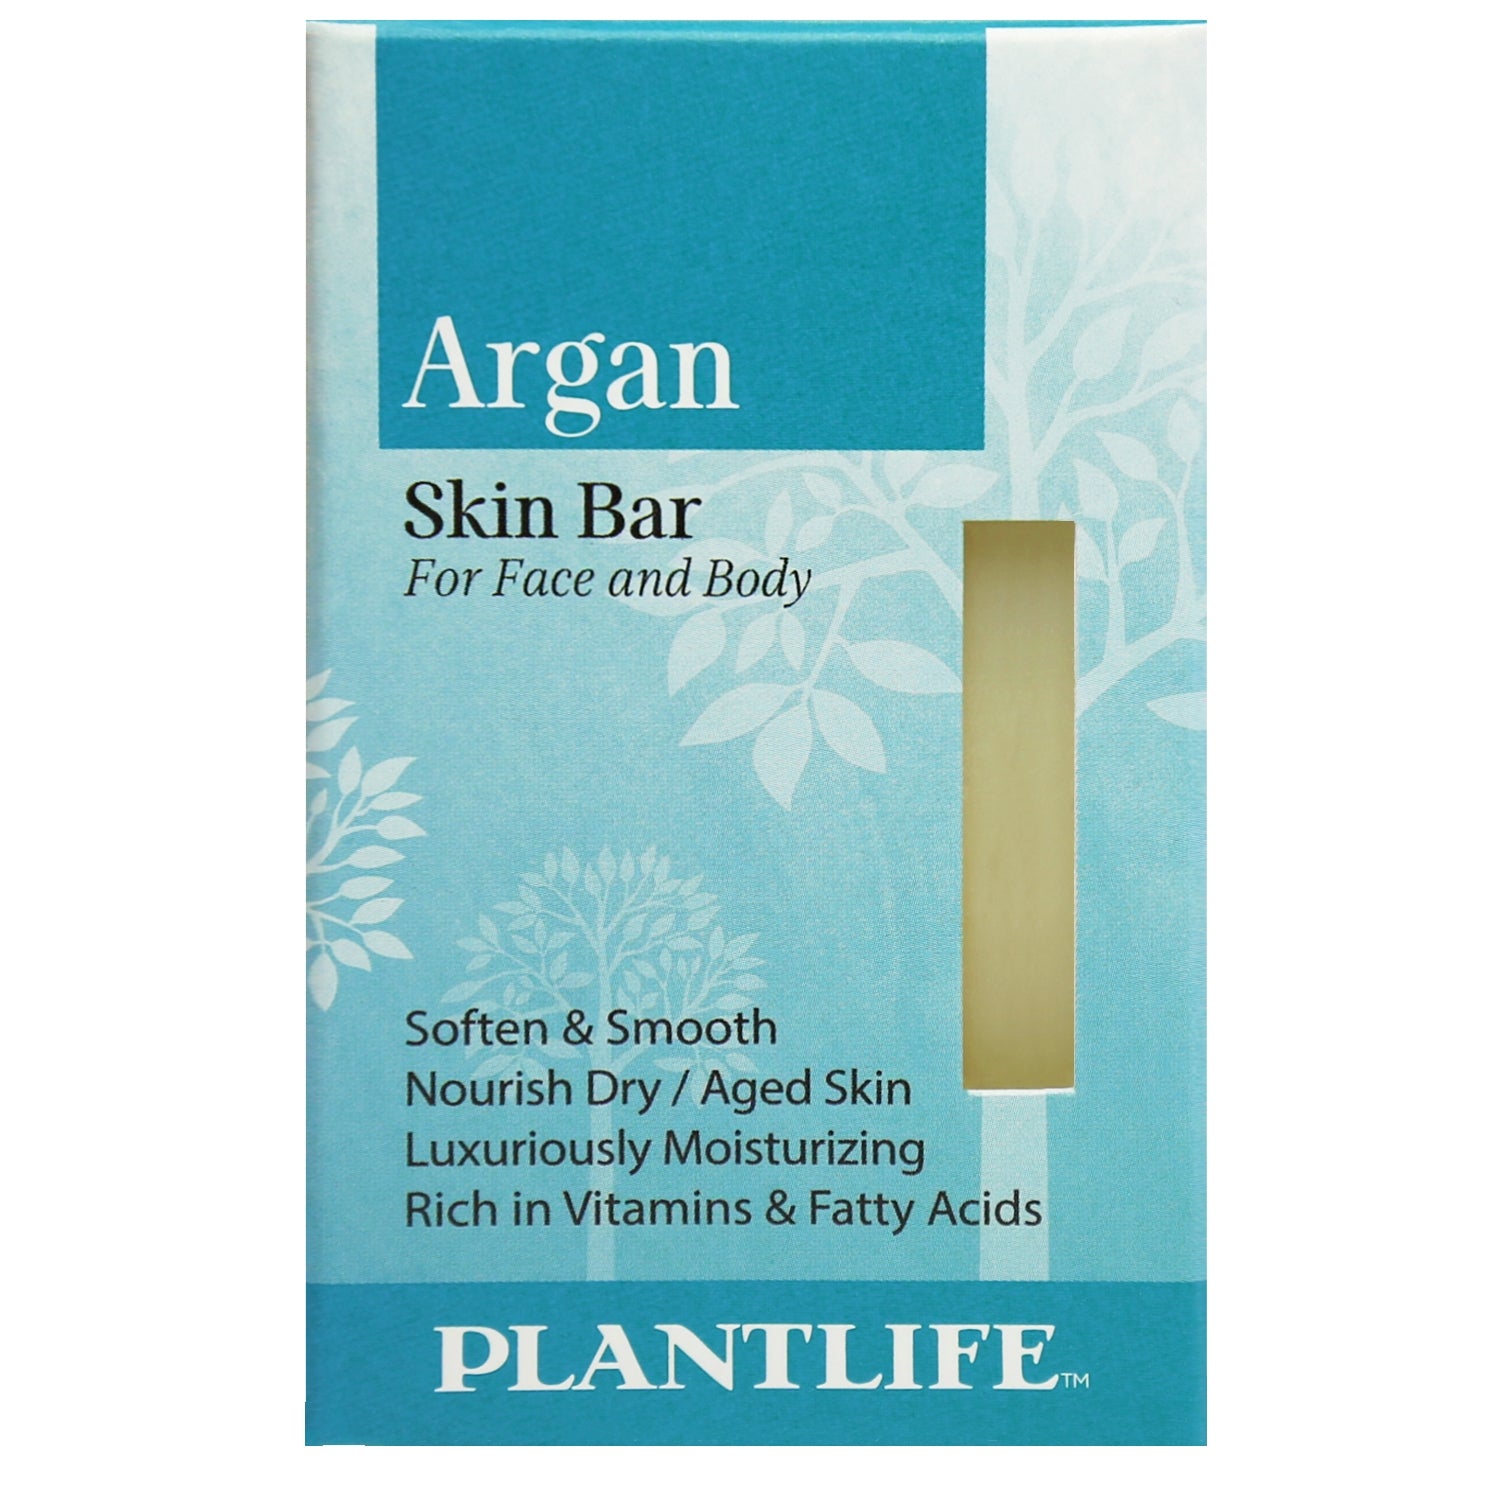 Argan Skin Bar Sample